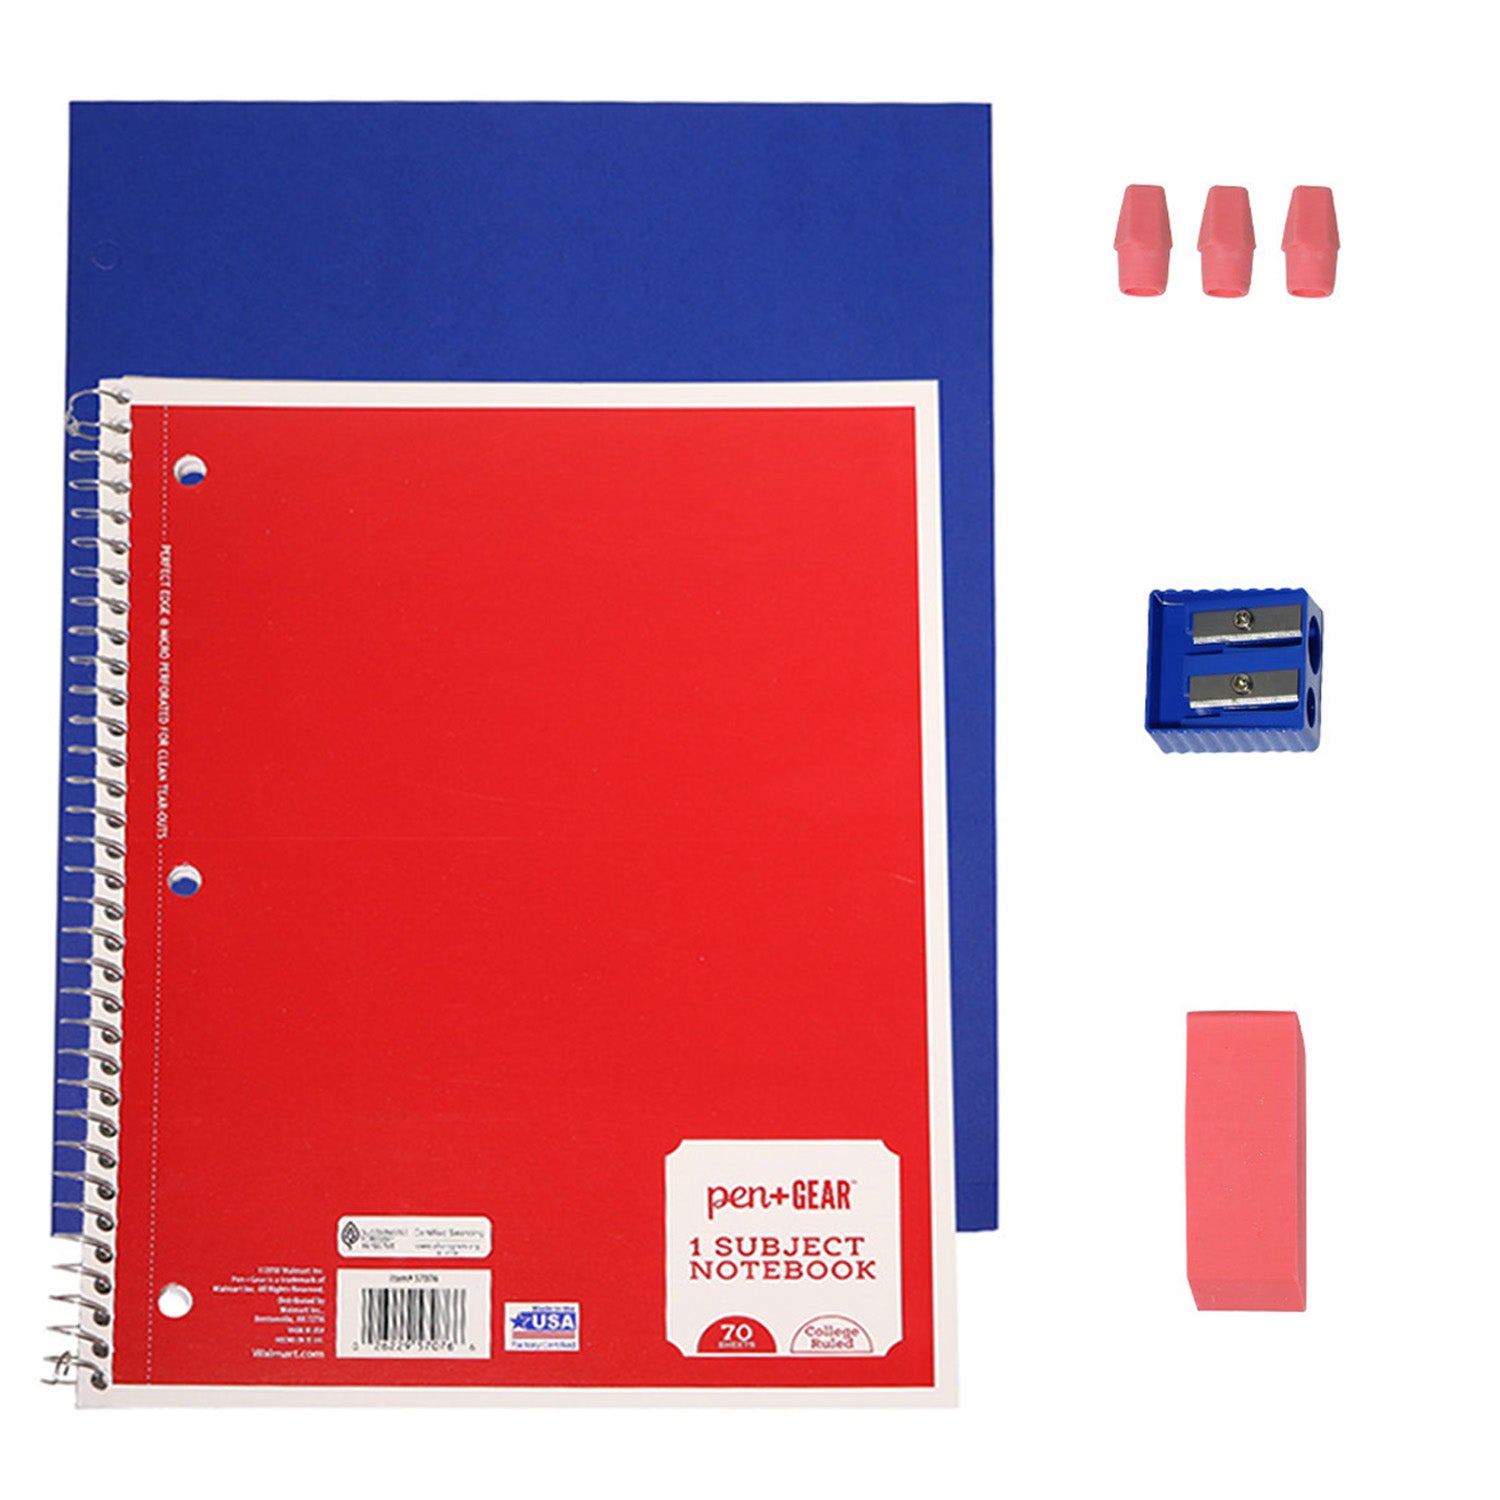 34 Piece Wholesale Premium School Supply Kits - Bulk Case of 24 Kits